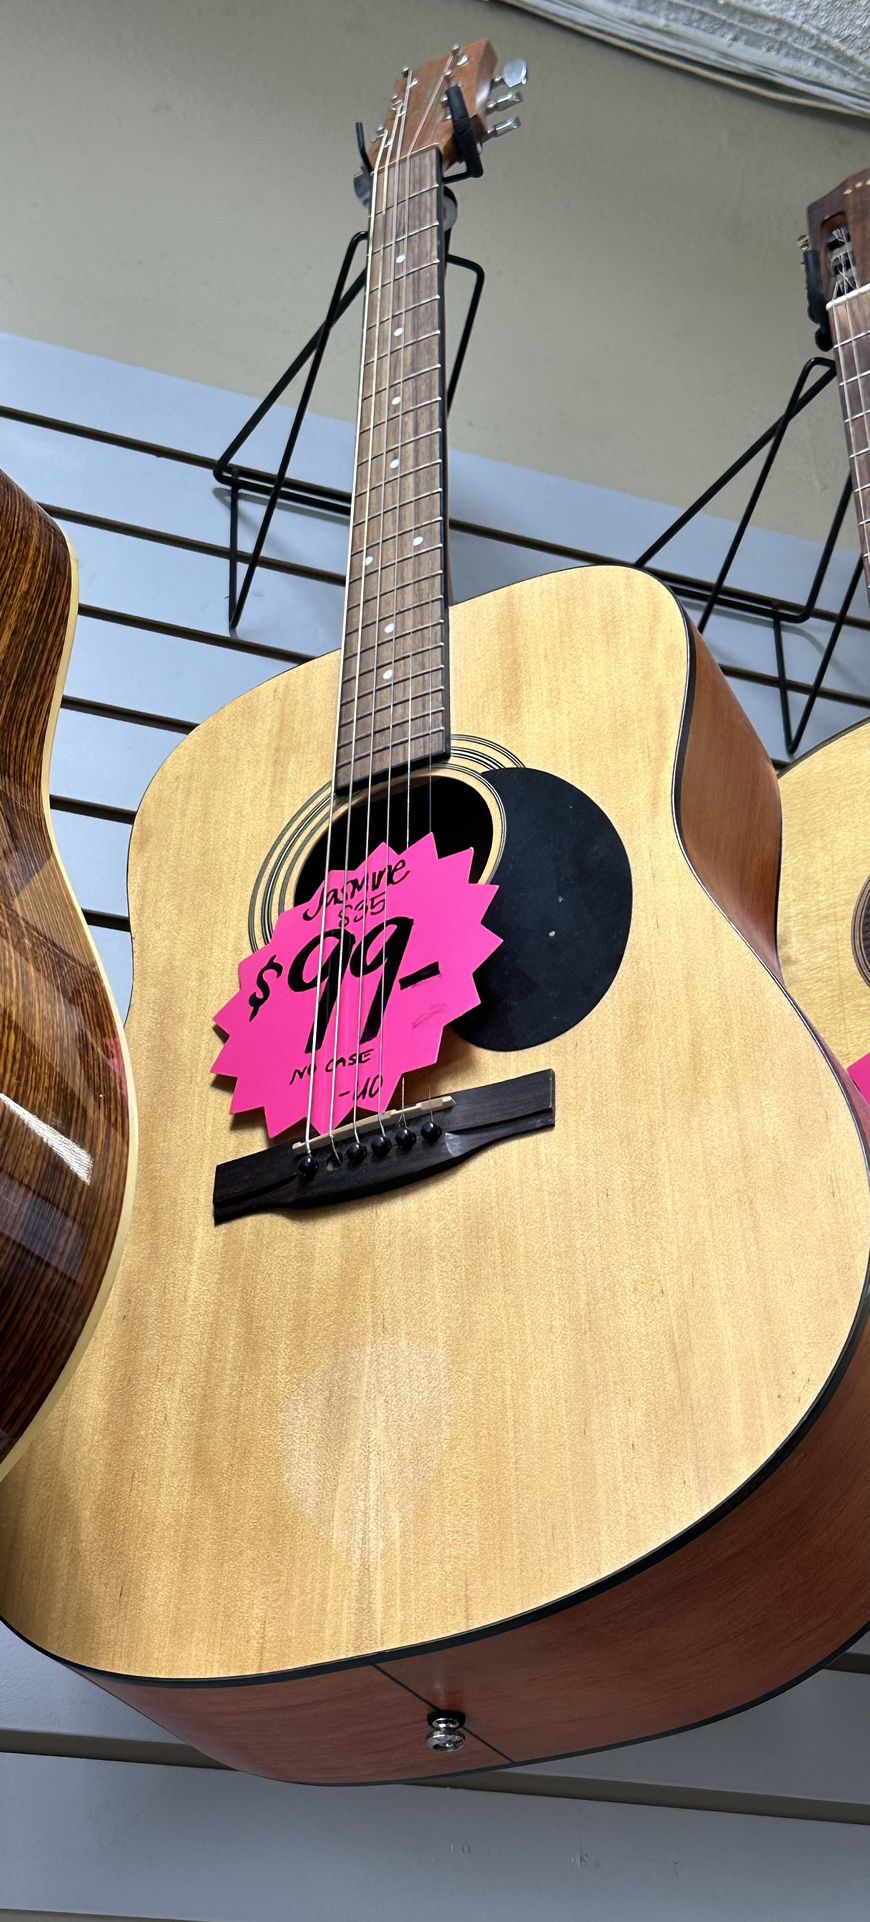 Jasmine S35 Acoustic Guitar 